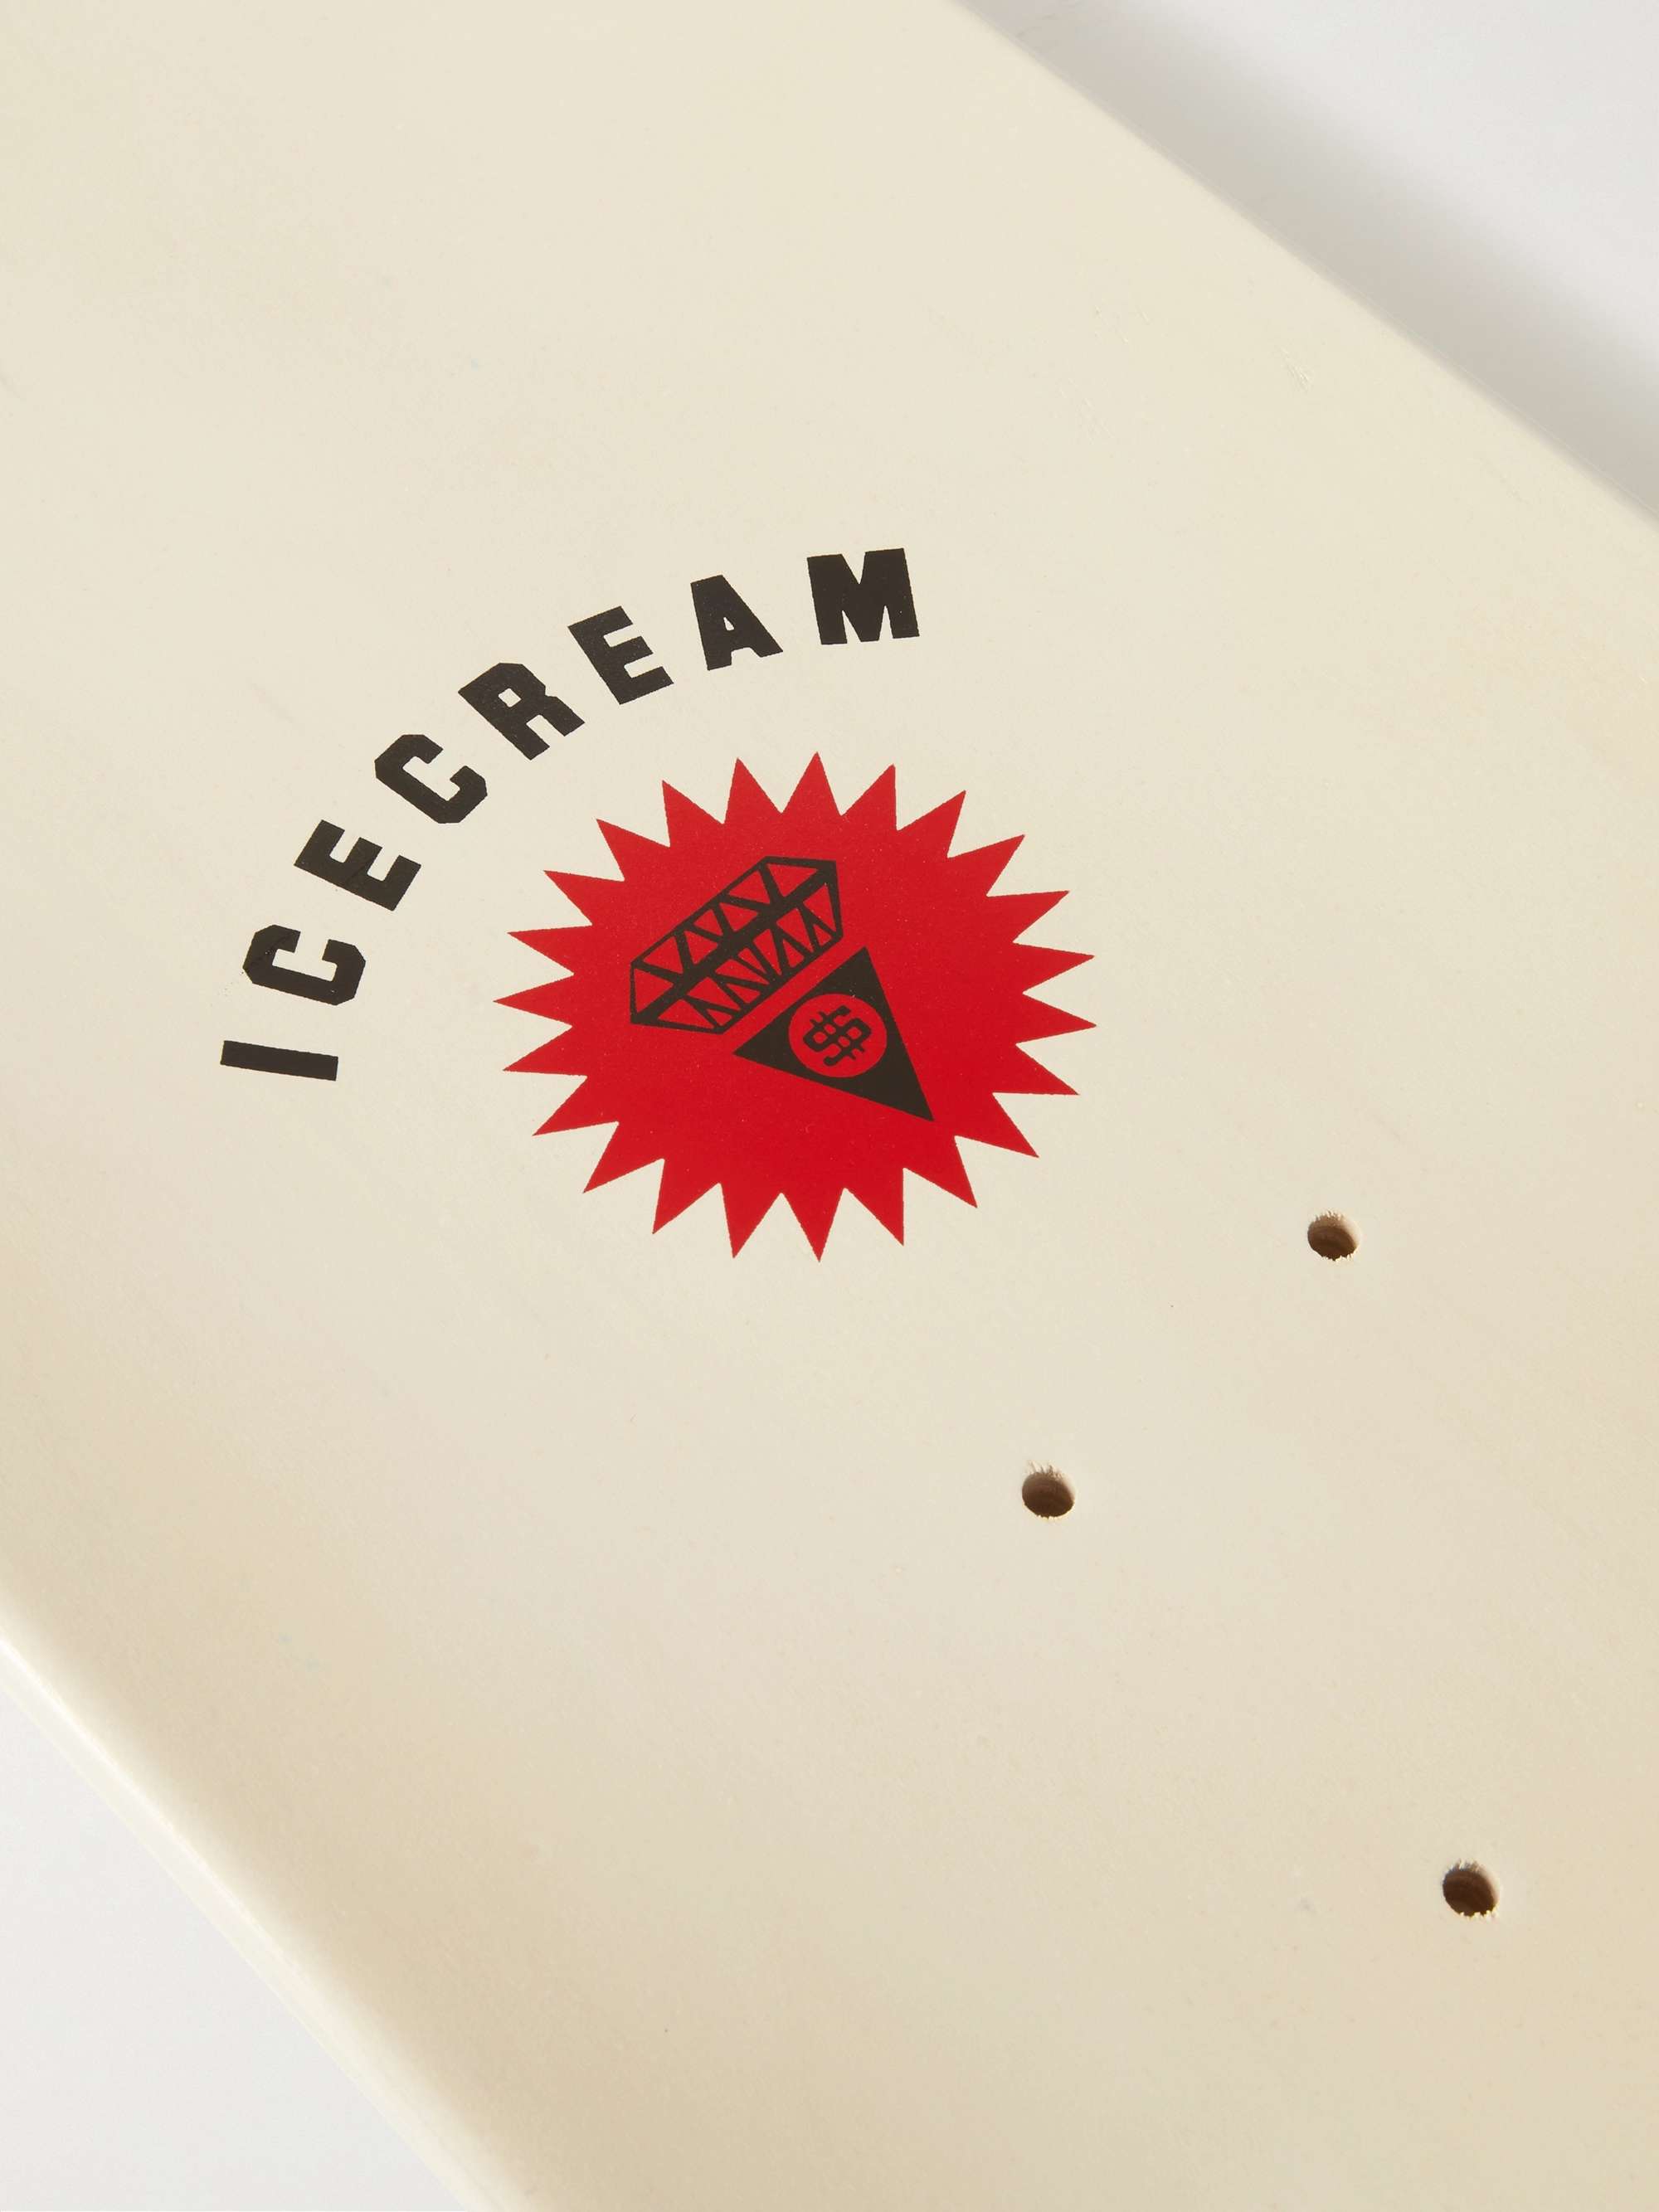 ICECREAM Printed Wooden Skateboard